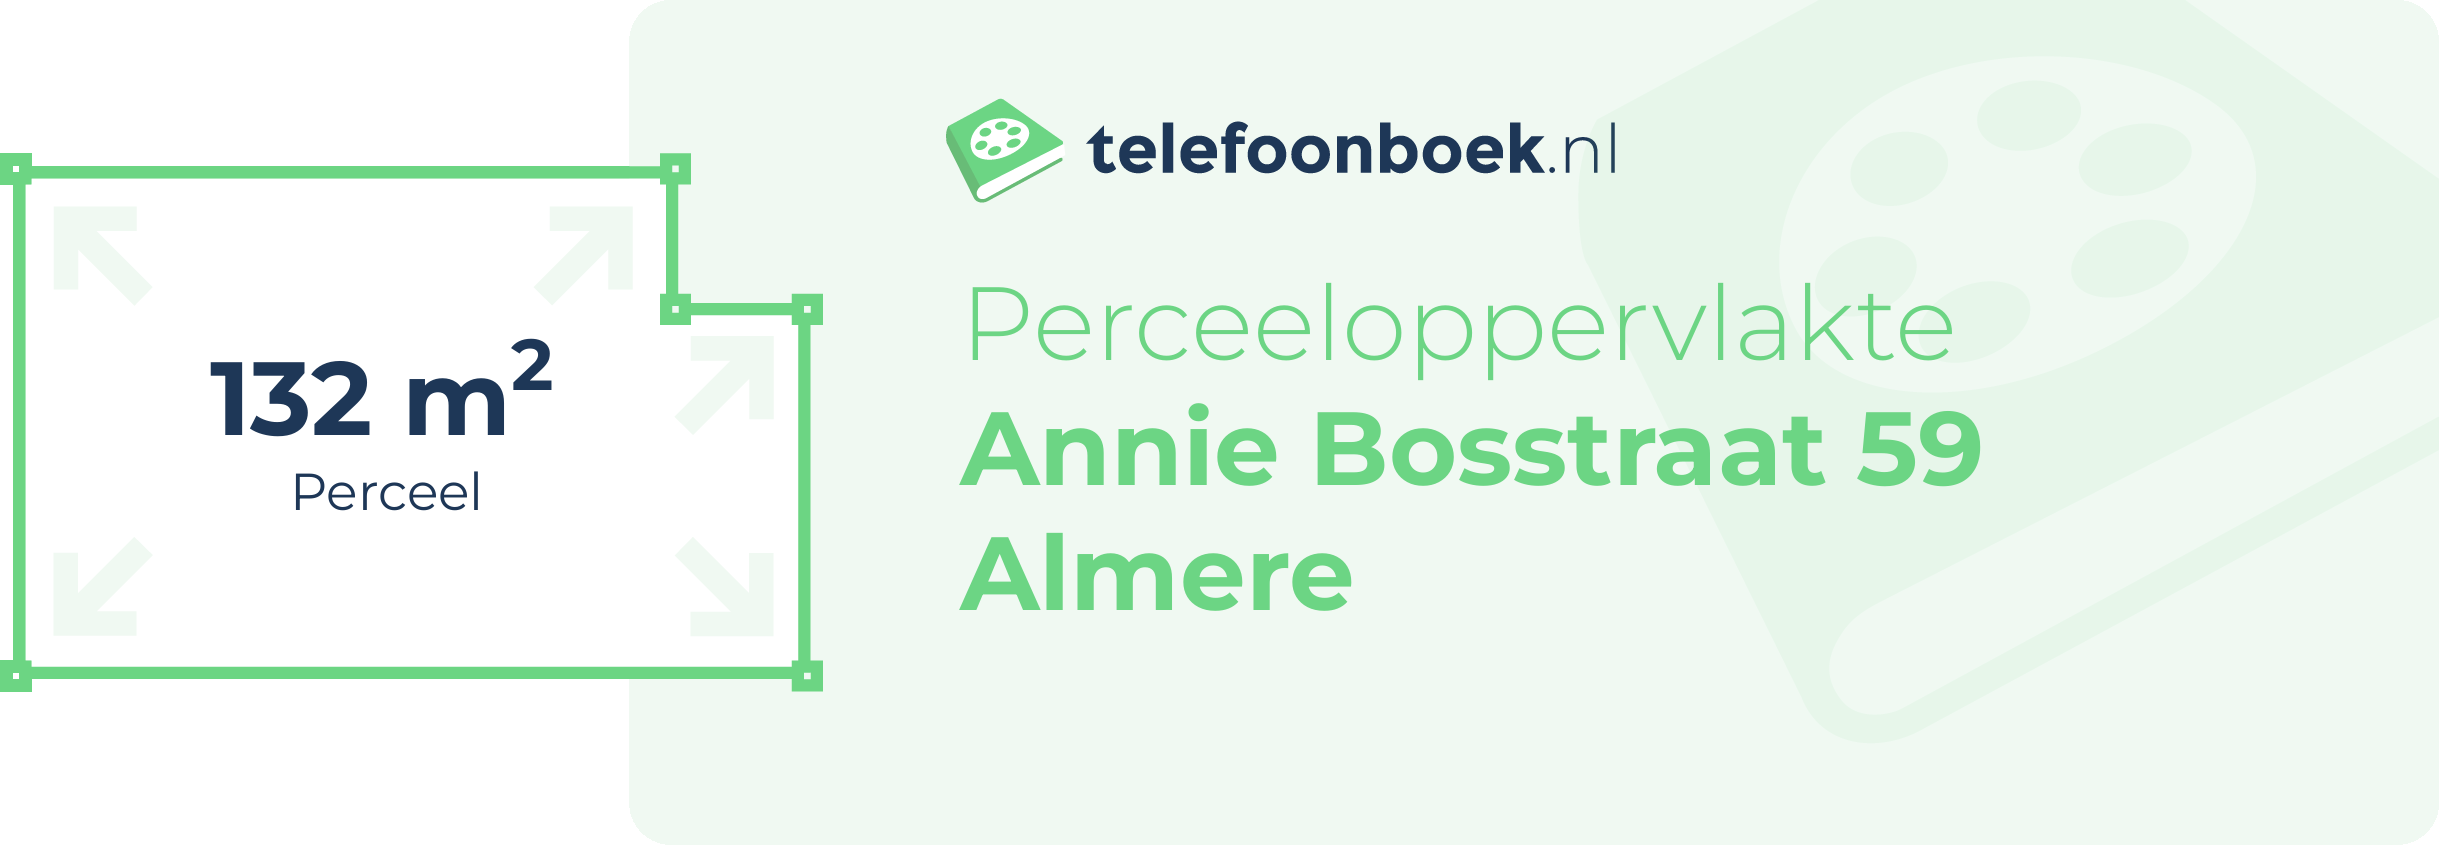 Perceeloppervlakte Annie Bosstraat 59 Almere